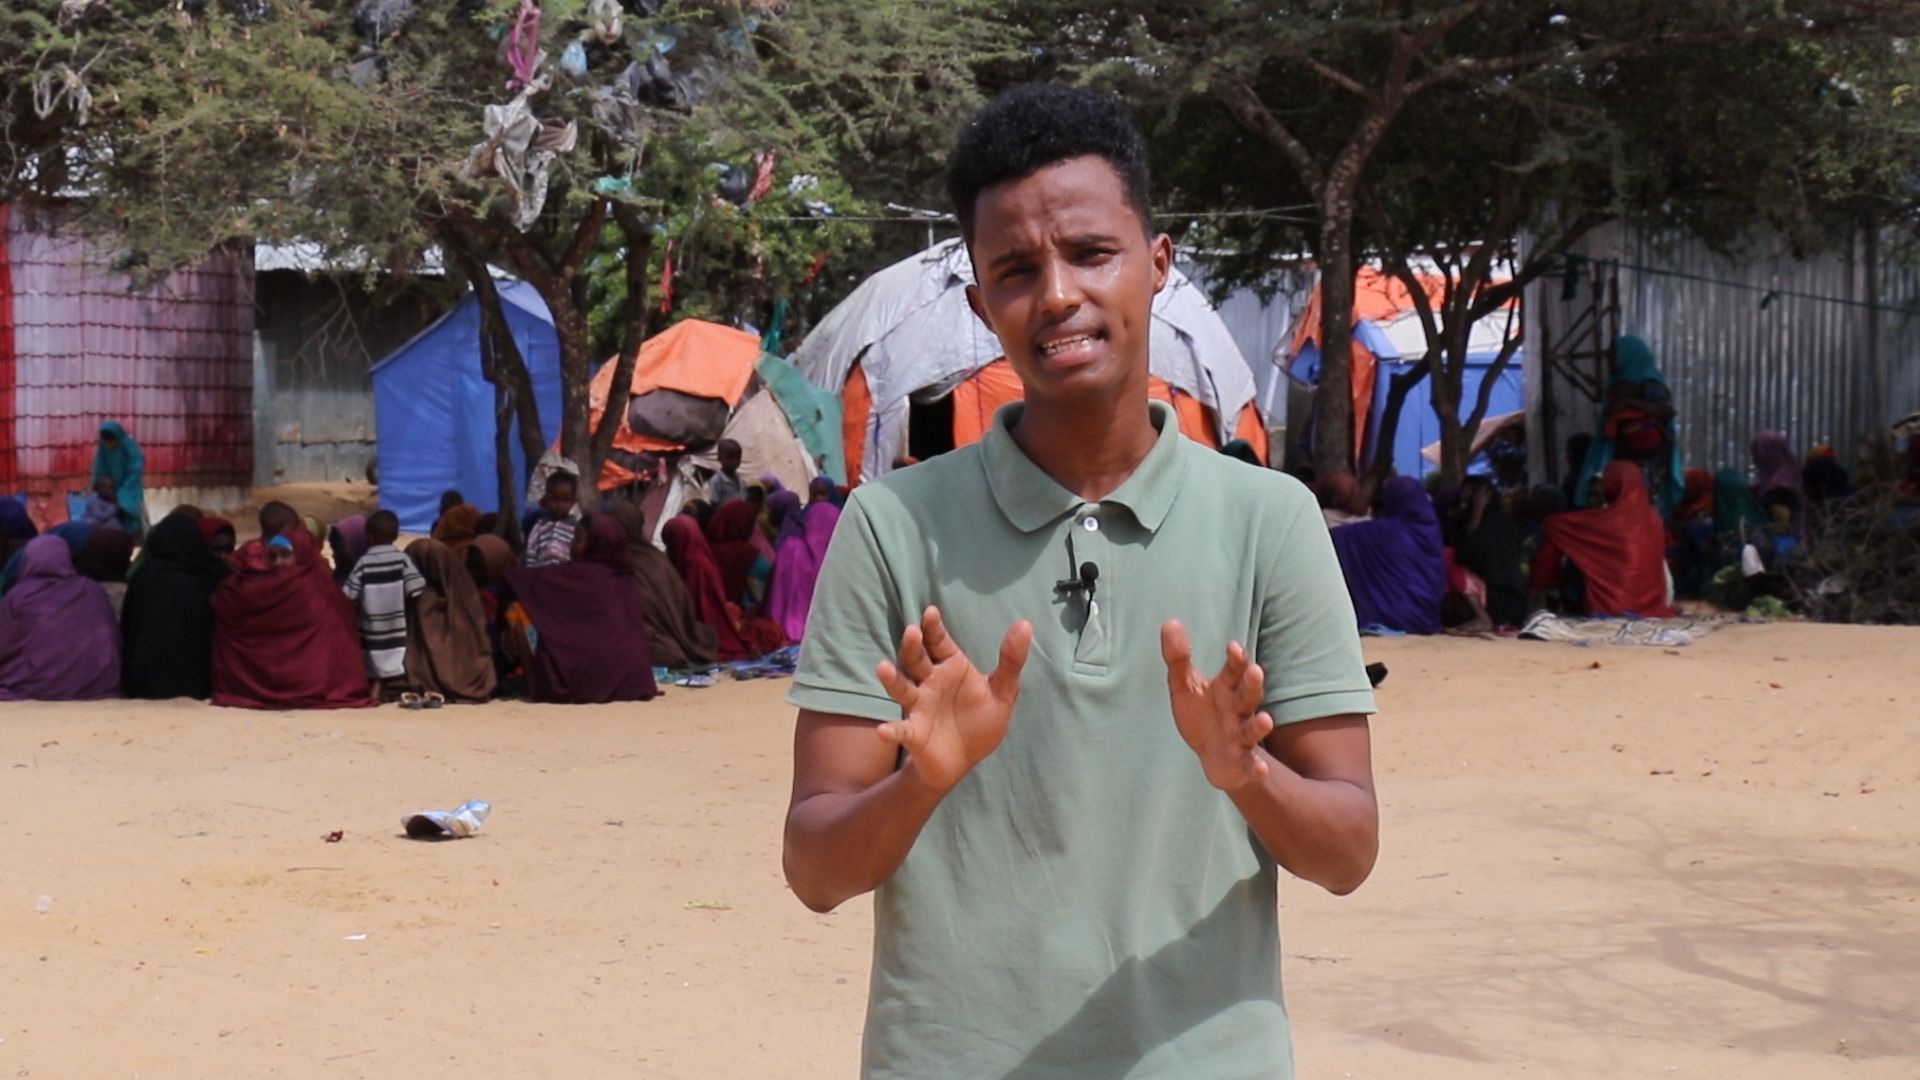 Somali journalist Mohamed Ibrahim Osman Bulbul filming a story